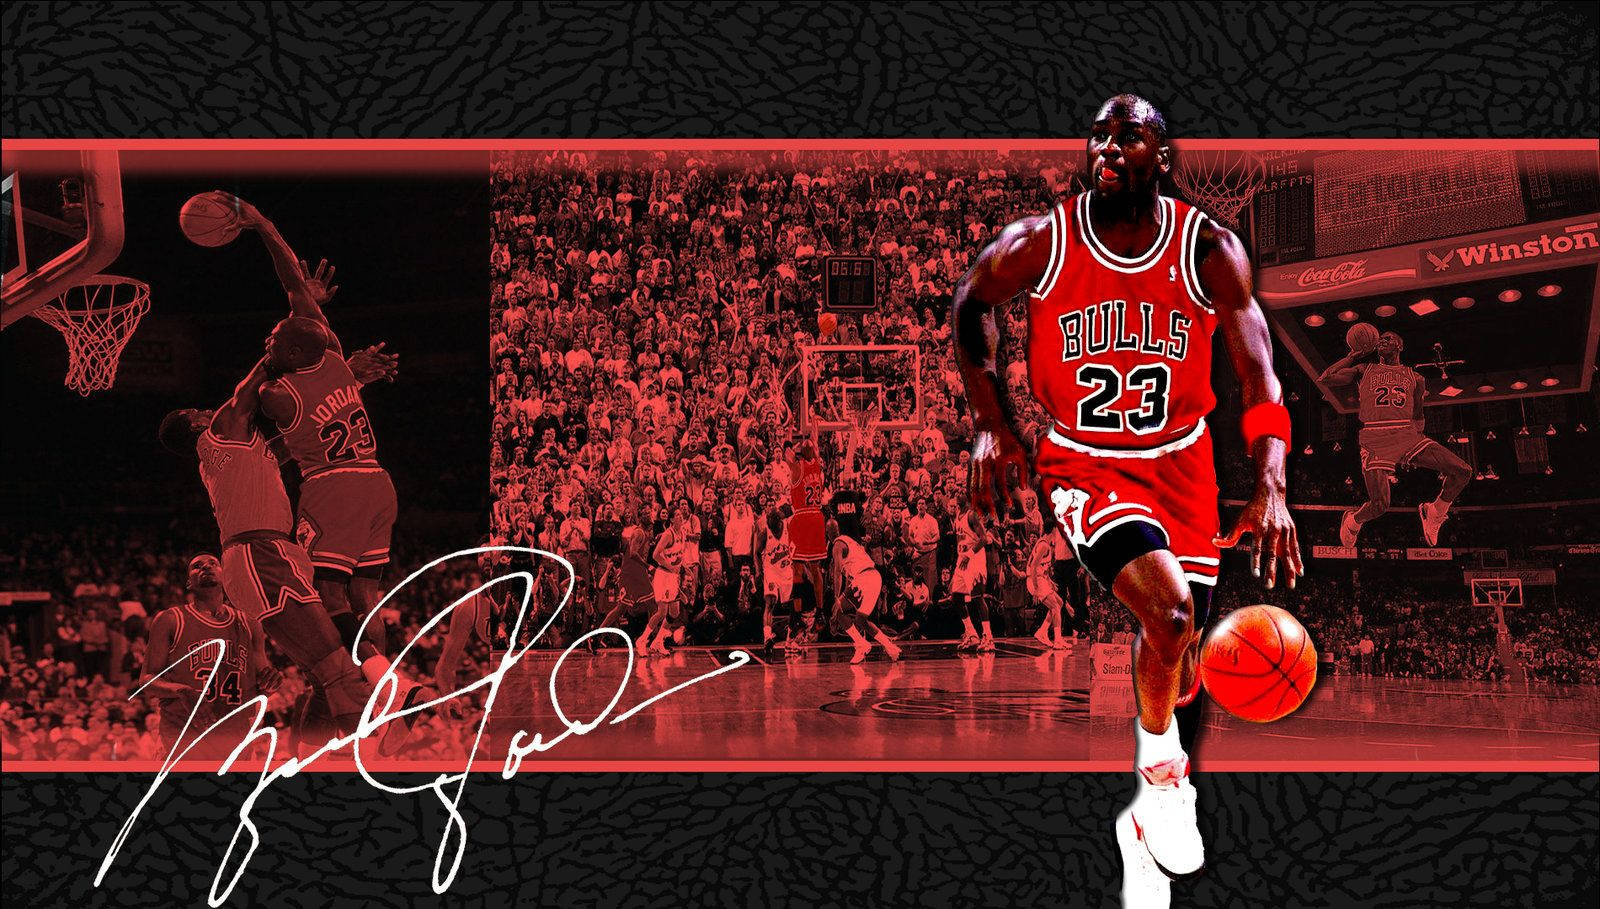 Michael Jordan 1600X909 Wallpaper and Background Image